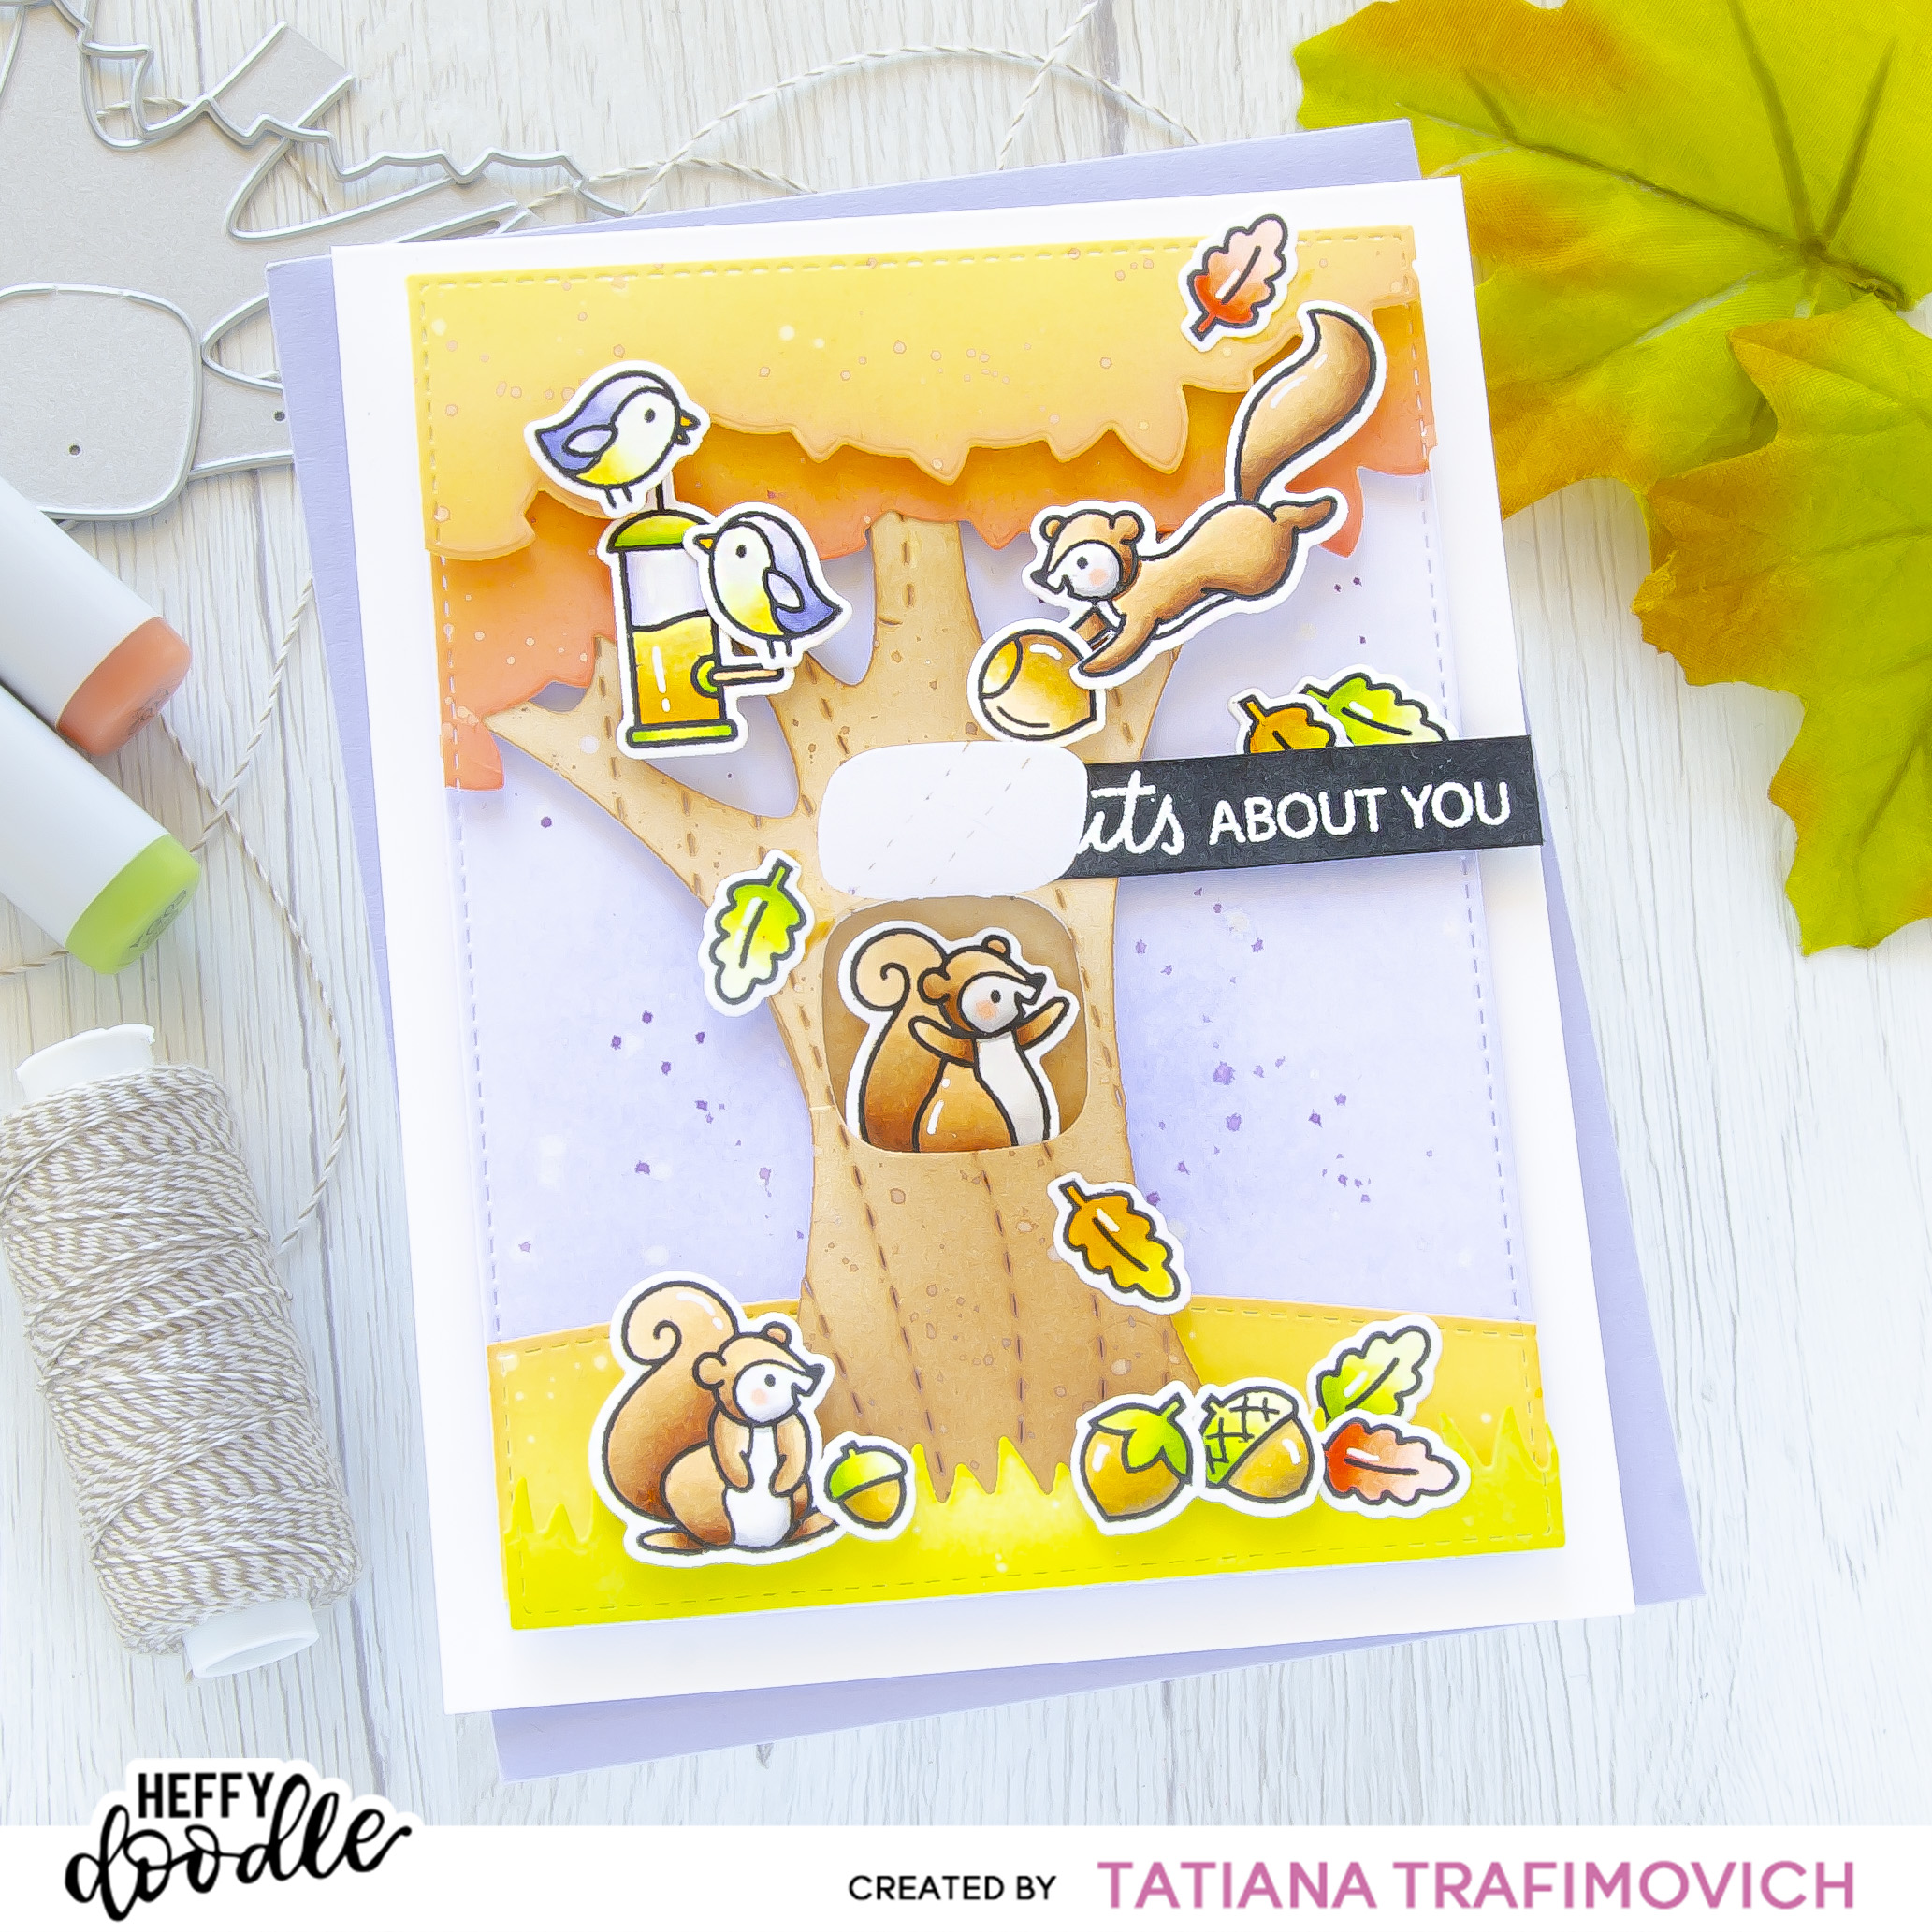 I'm NUTS About You #handmade card by Tatiana Trafimovich #tatianacraftandart - Nuts About You stamp set by Heffy Doodle #heffydoodle